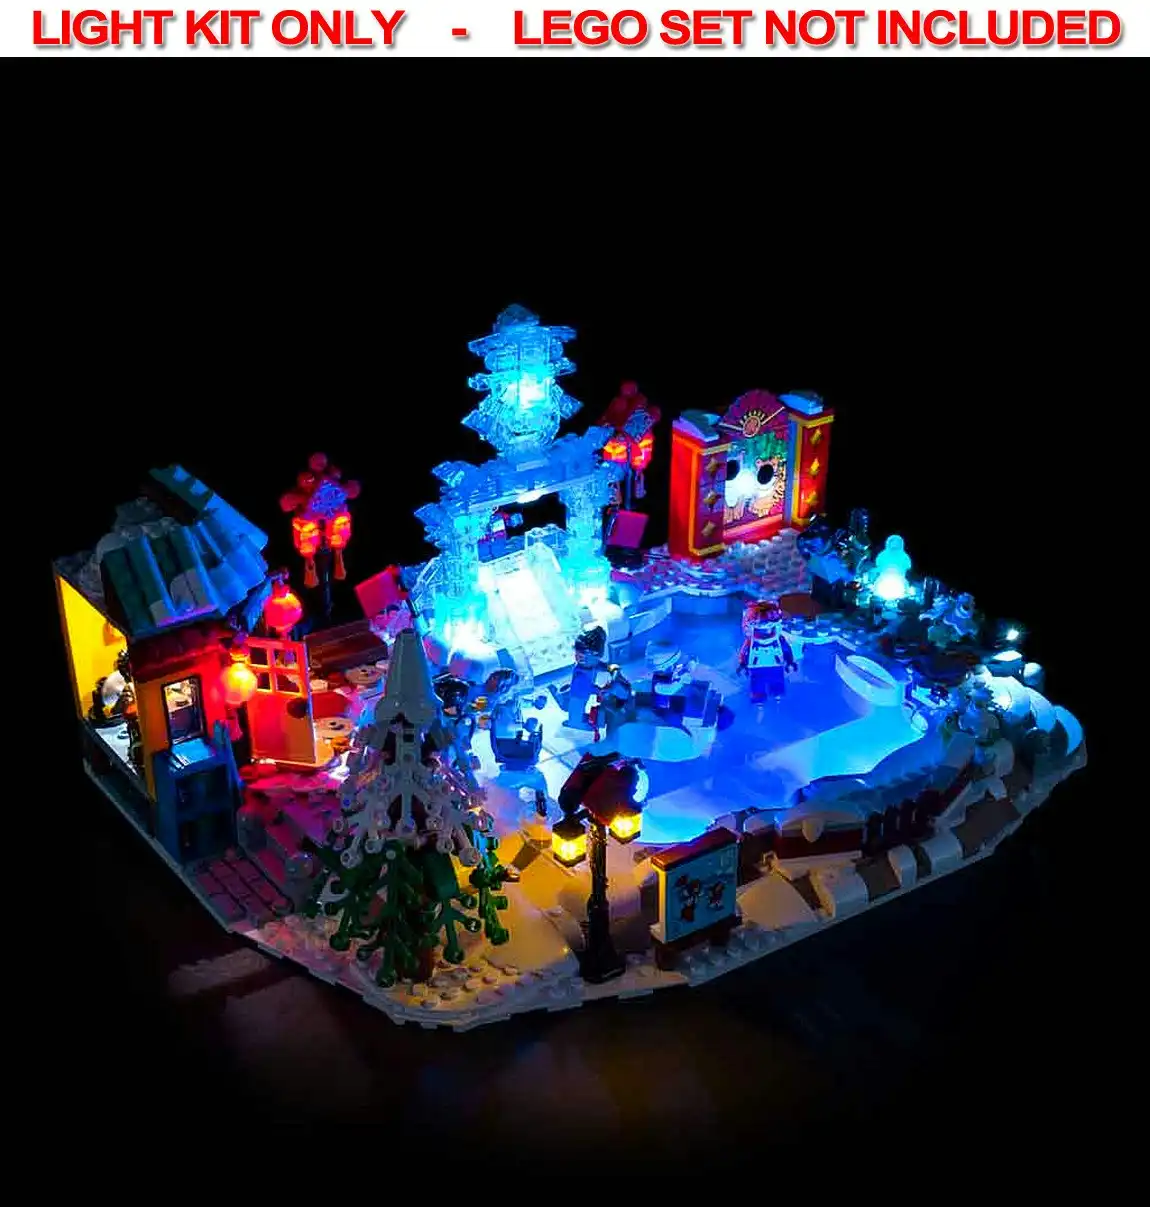 Light My Bricks - LIGHT KIT for LEGO Luna New Year Ice Festival 80109